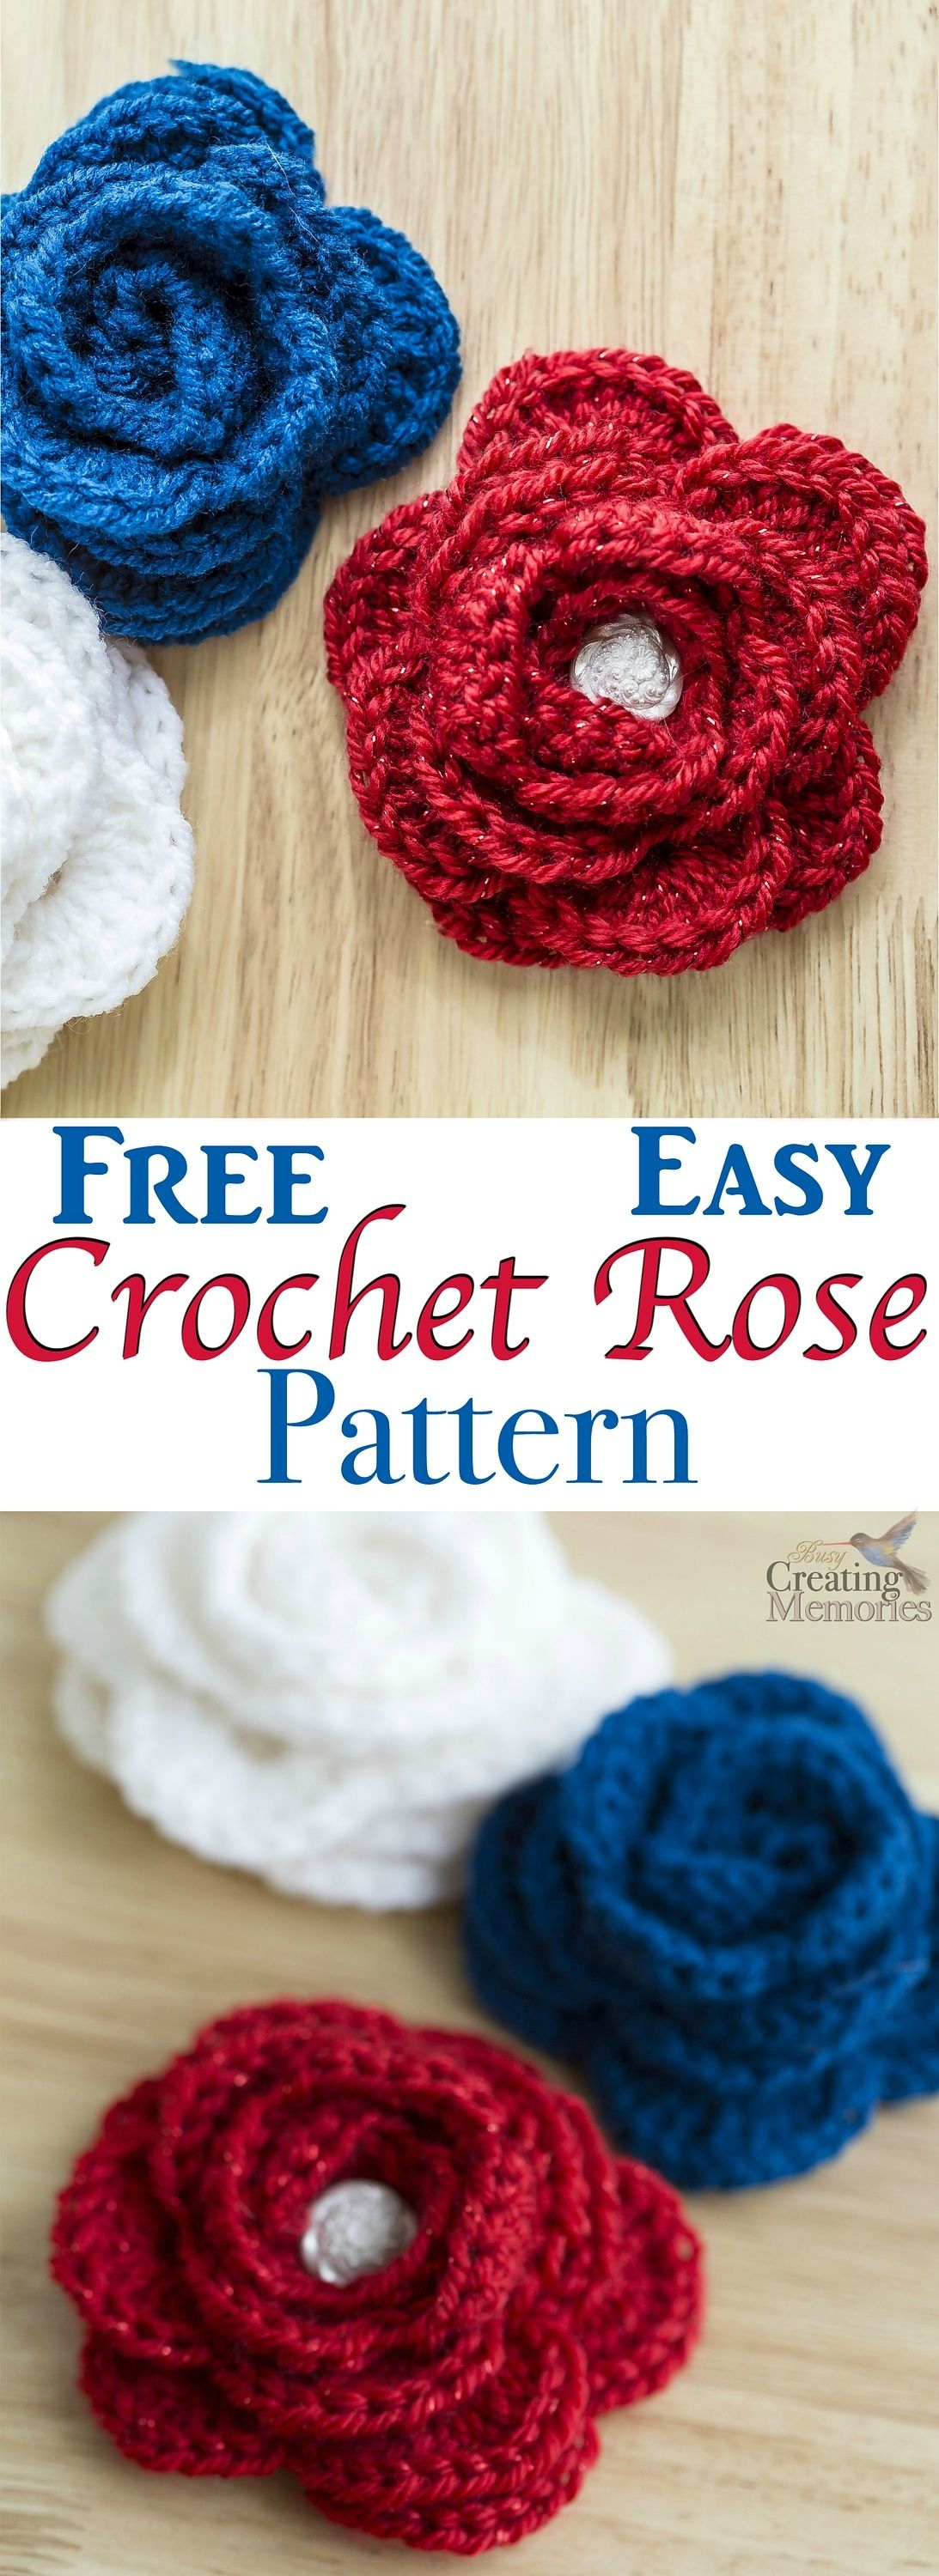 Simple Crochet Rose Pattern Free Easy Crochet Rose Pattern Crochet Ideas And Inspiration